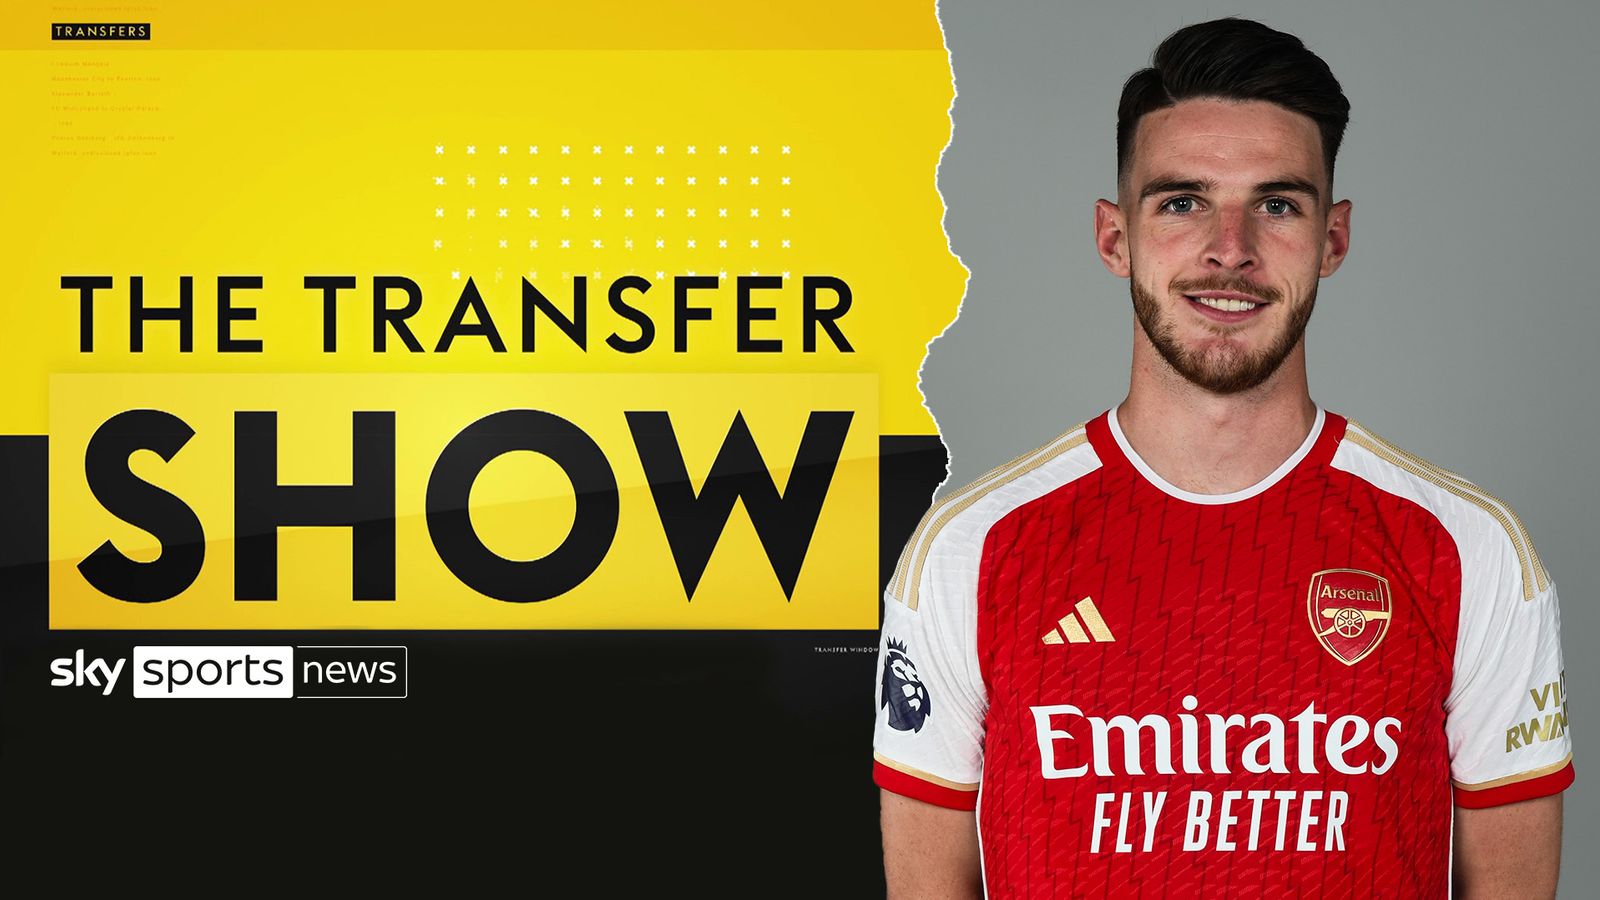 LIVE STREAM: Watch The Transfer Show live on Sky Sports News | Football News